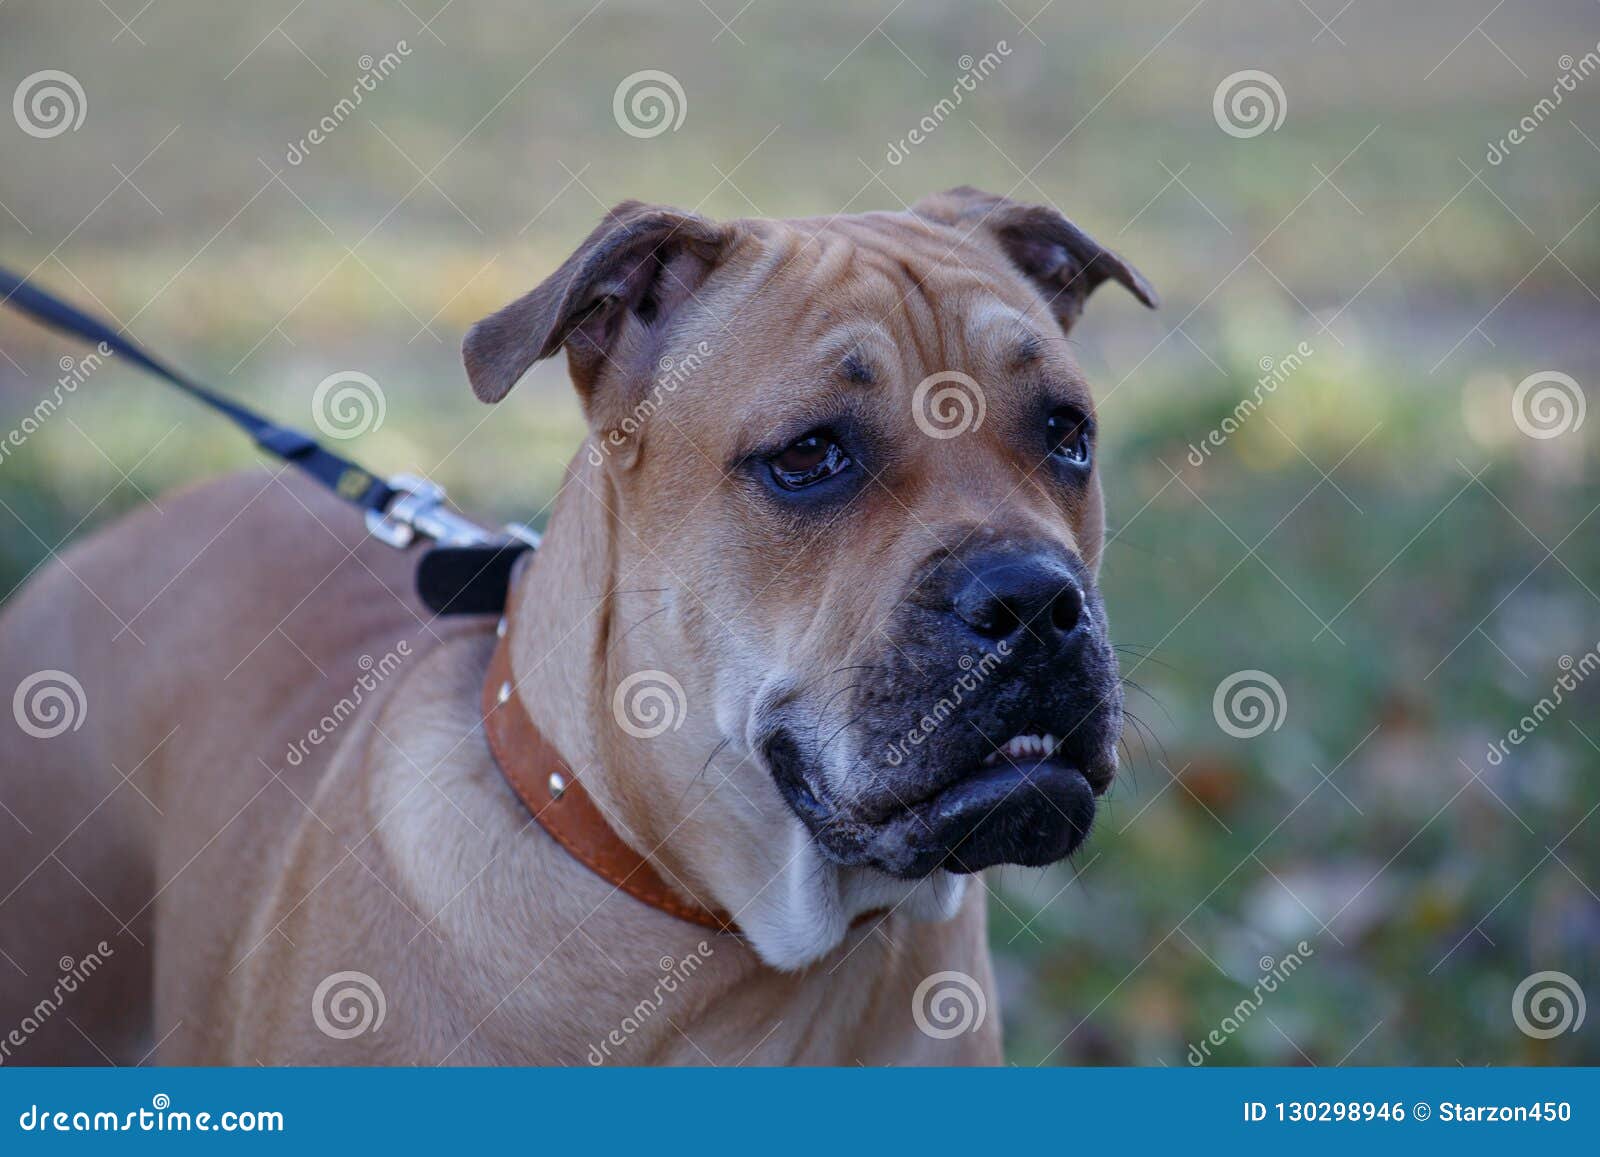 ca de bou puppy is standing on a autumn meadow. majorca mastiff or majorcan bulldog. pet animals.